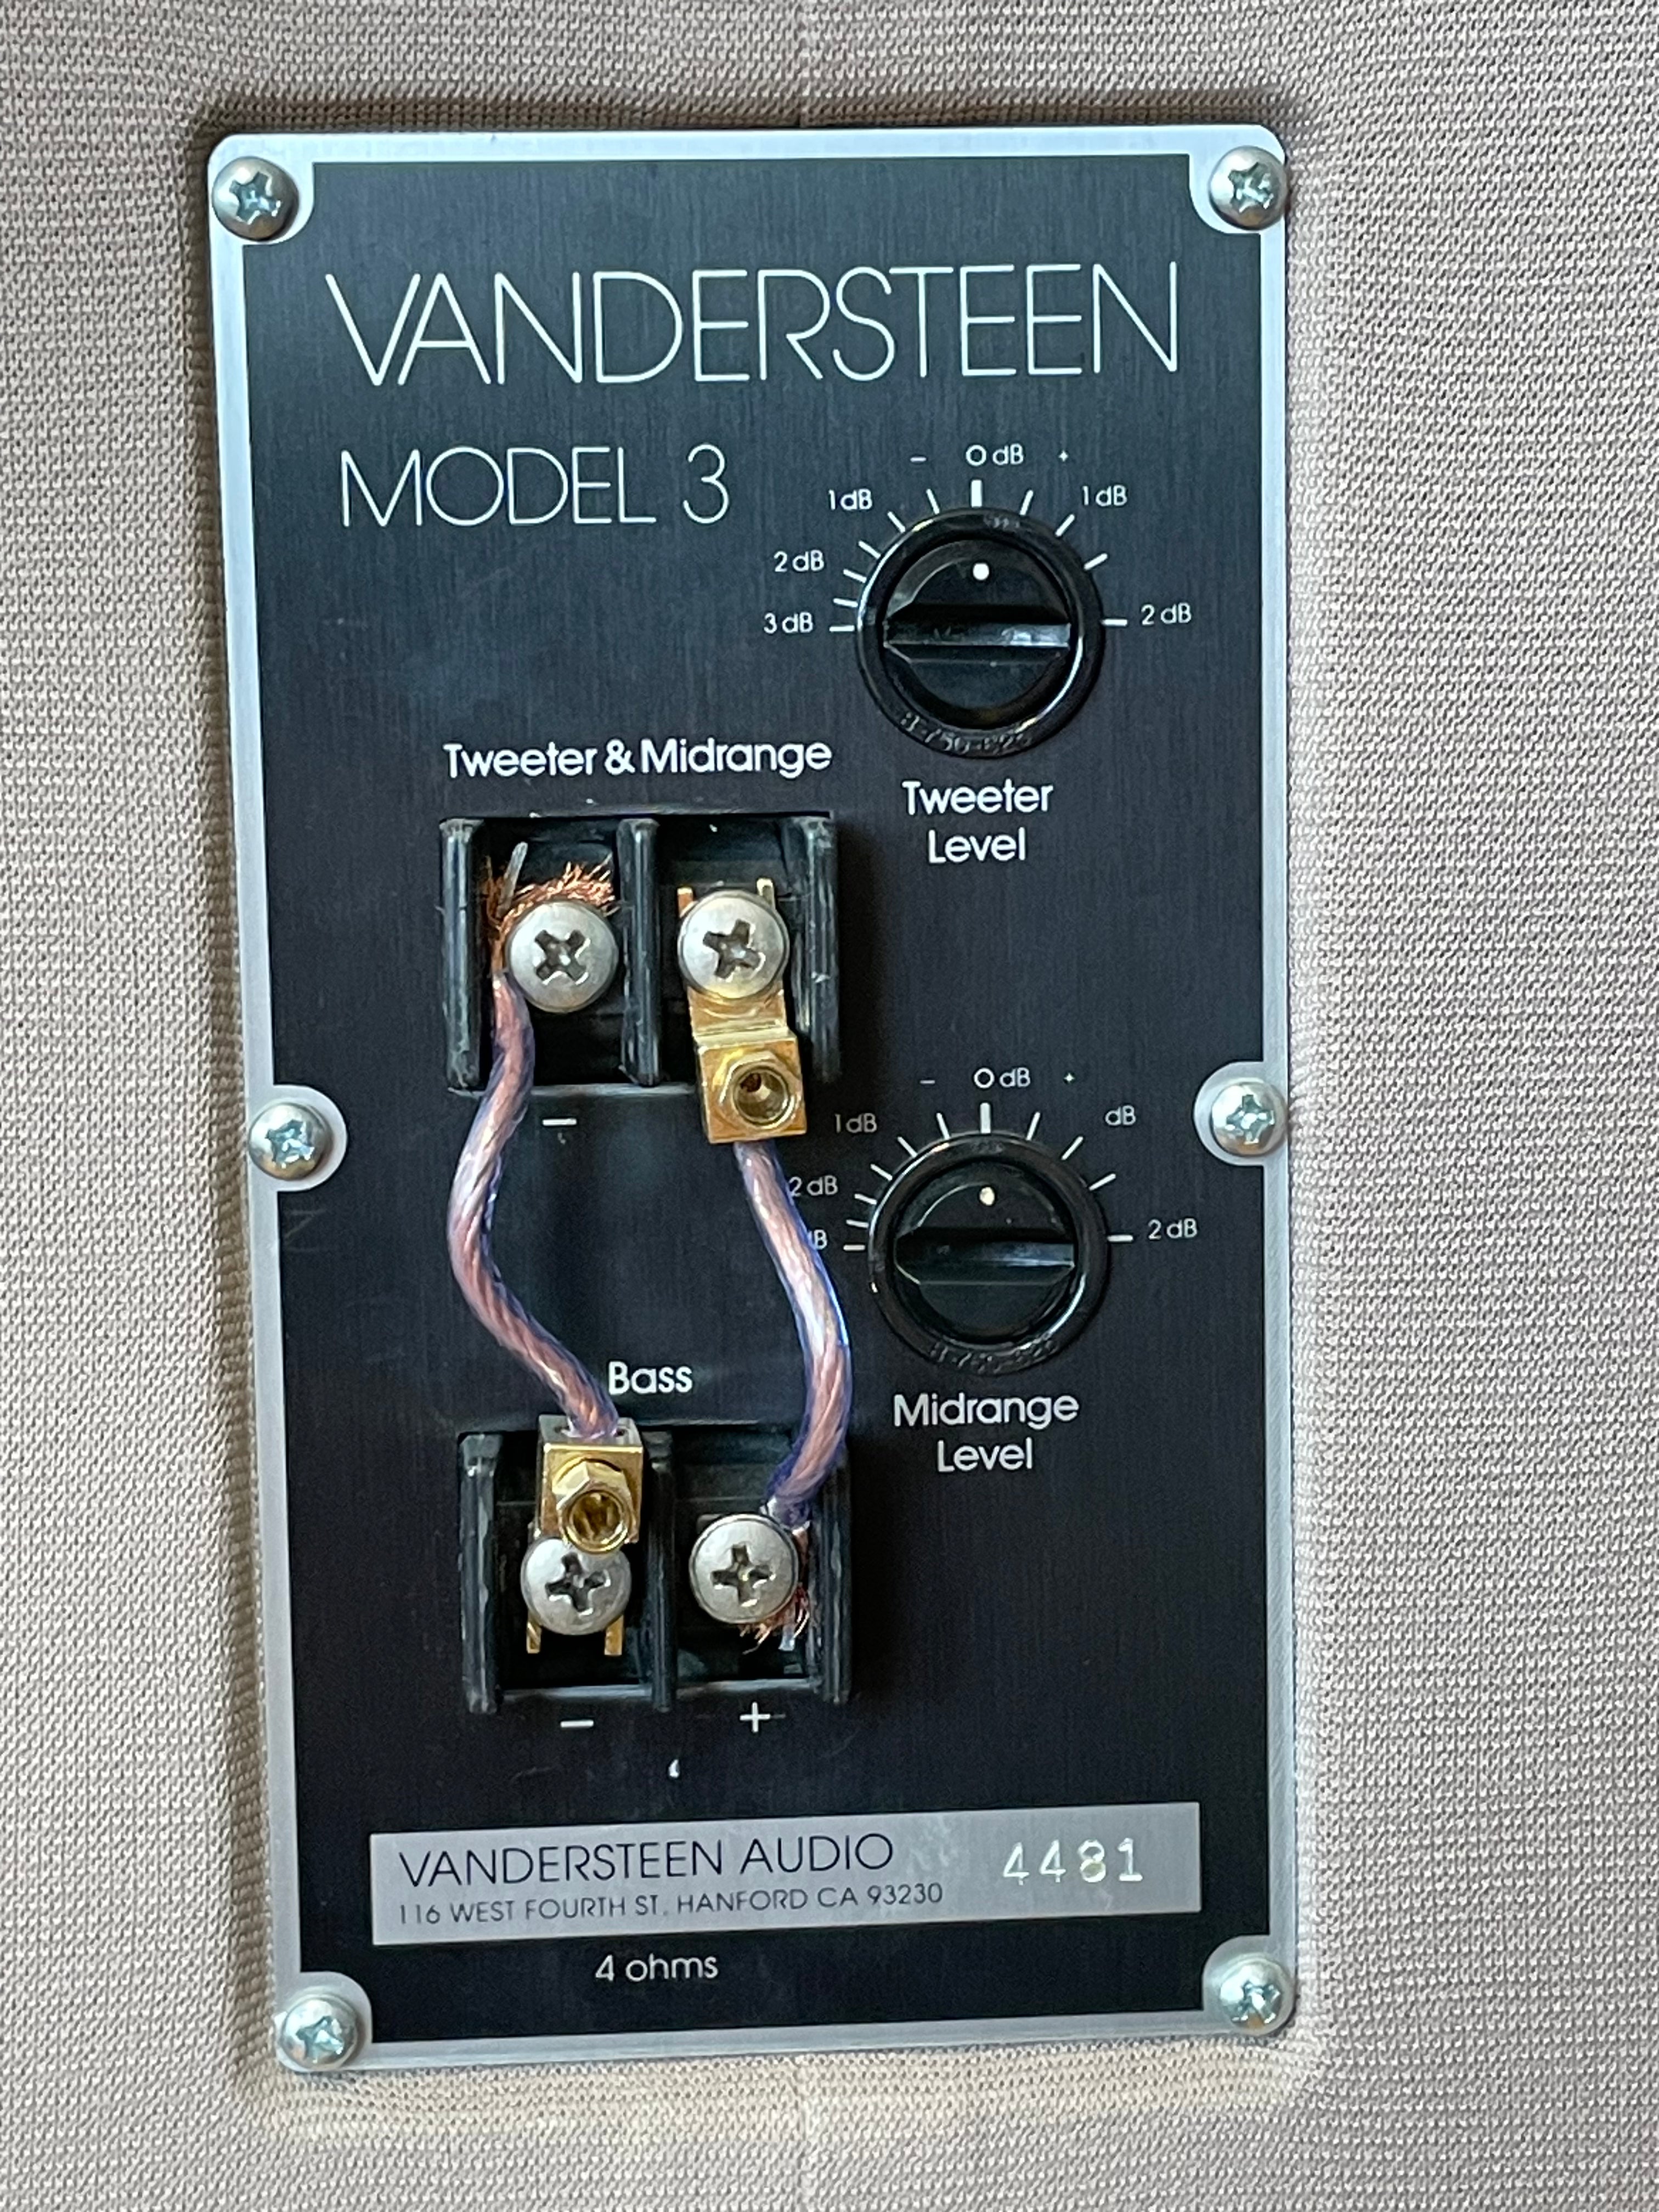 Vandersteen, Model 3 "Rare Sand Socks"